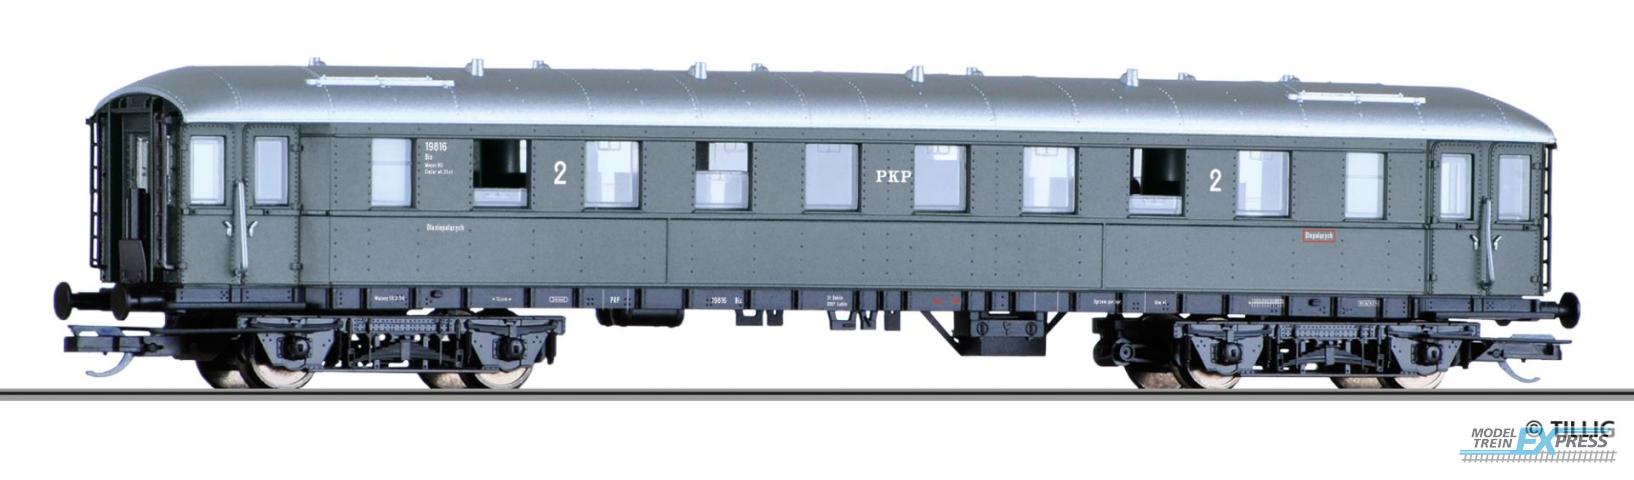 Tillig 13355 Reisezugwagen 2. Klasse Bix der PKP, Ep. III